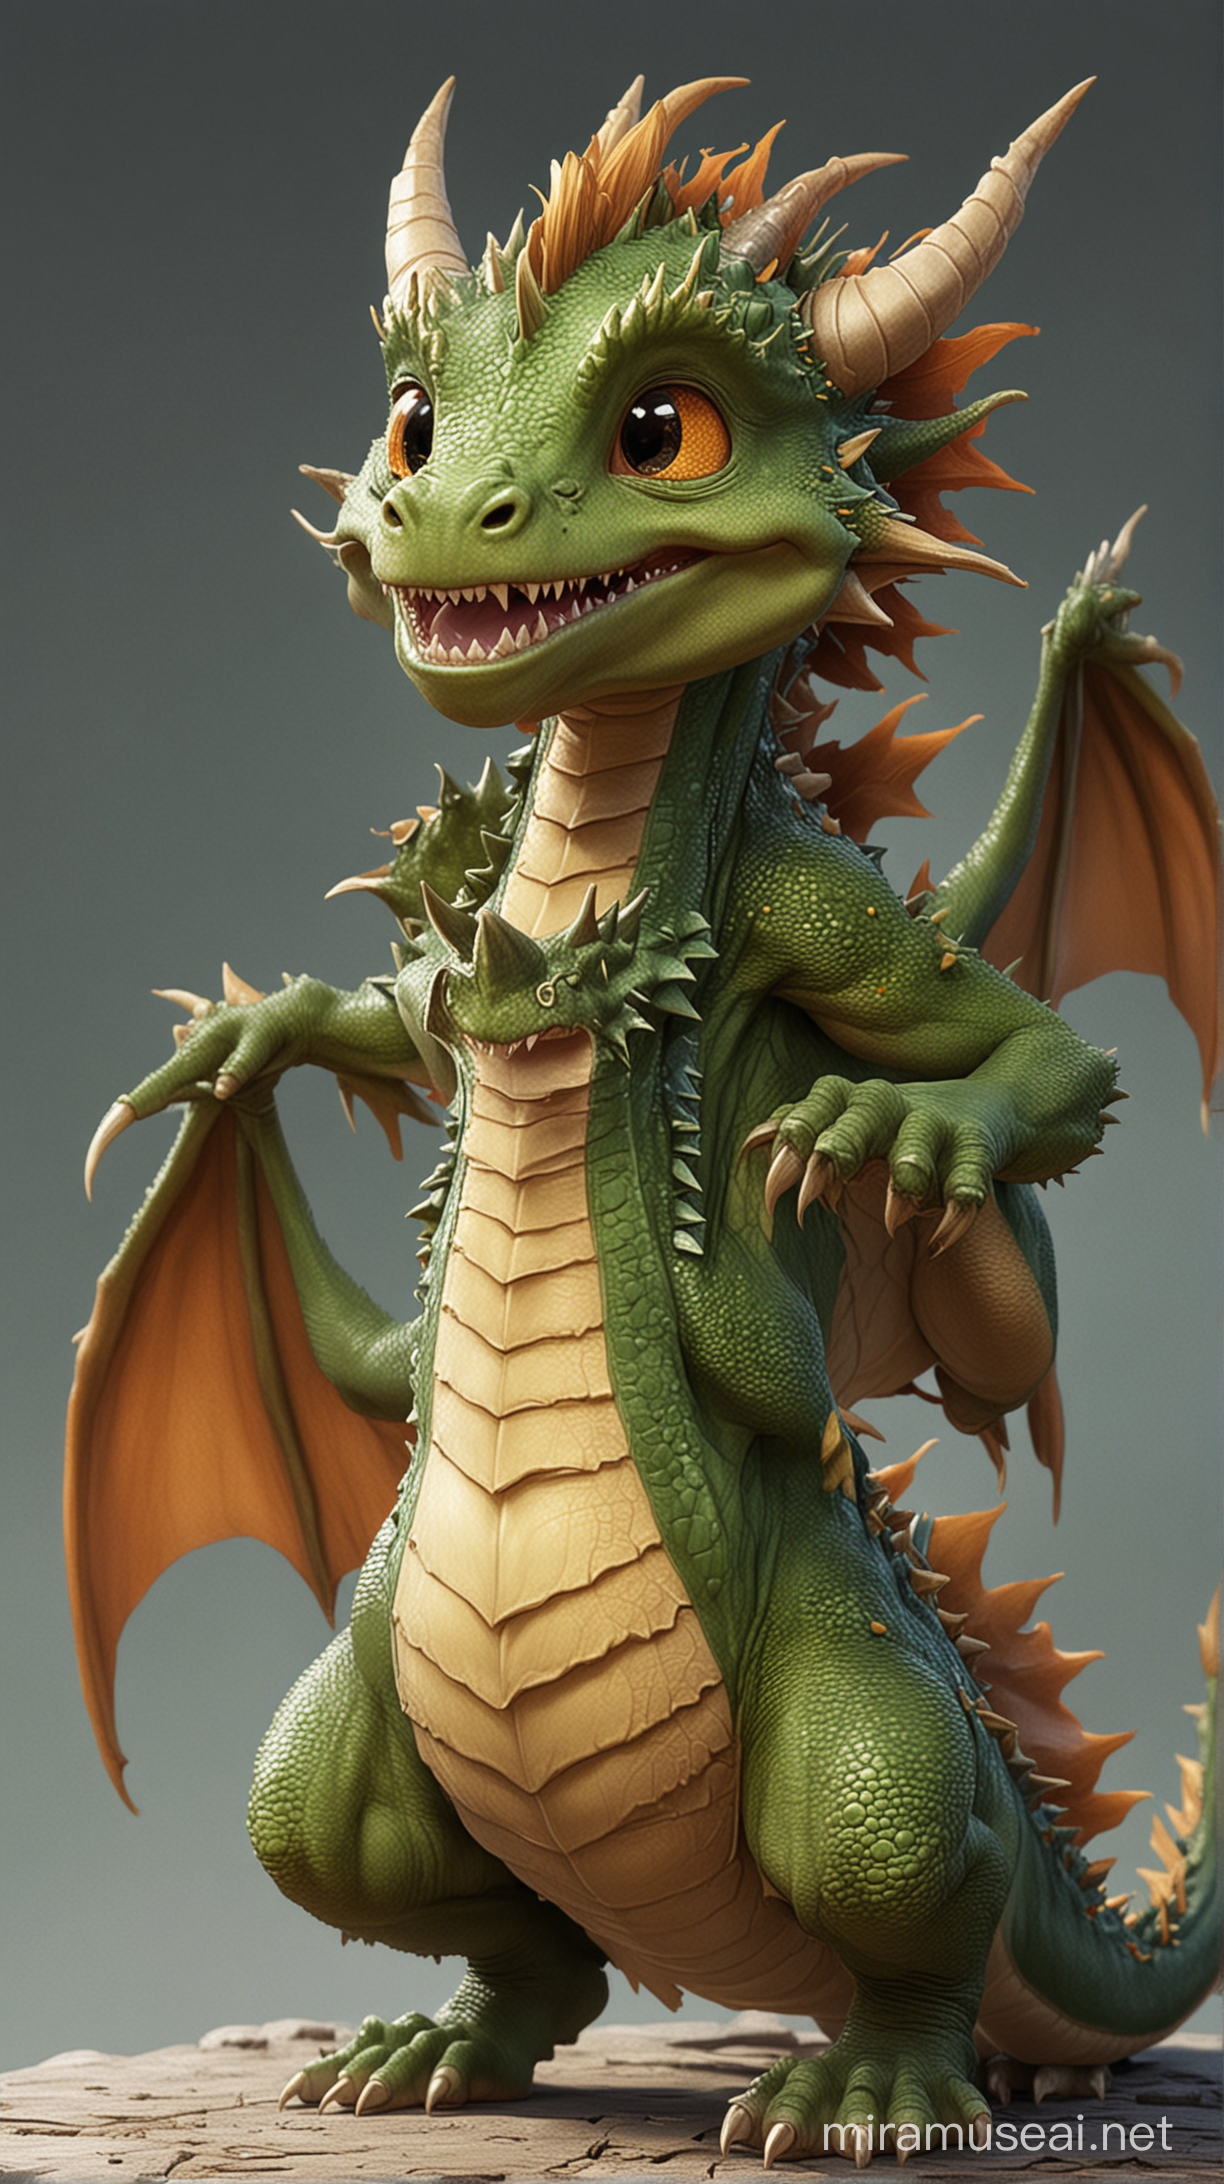 Joyful Little Dragon Boy Playful Fantasy Creature Smiles Happily